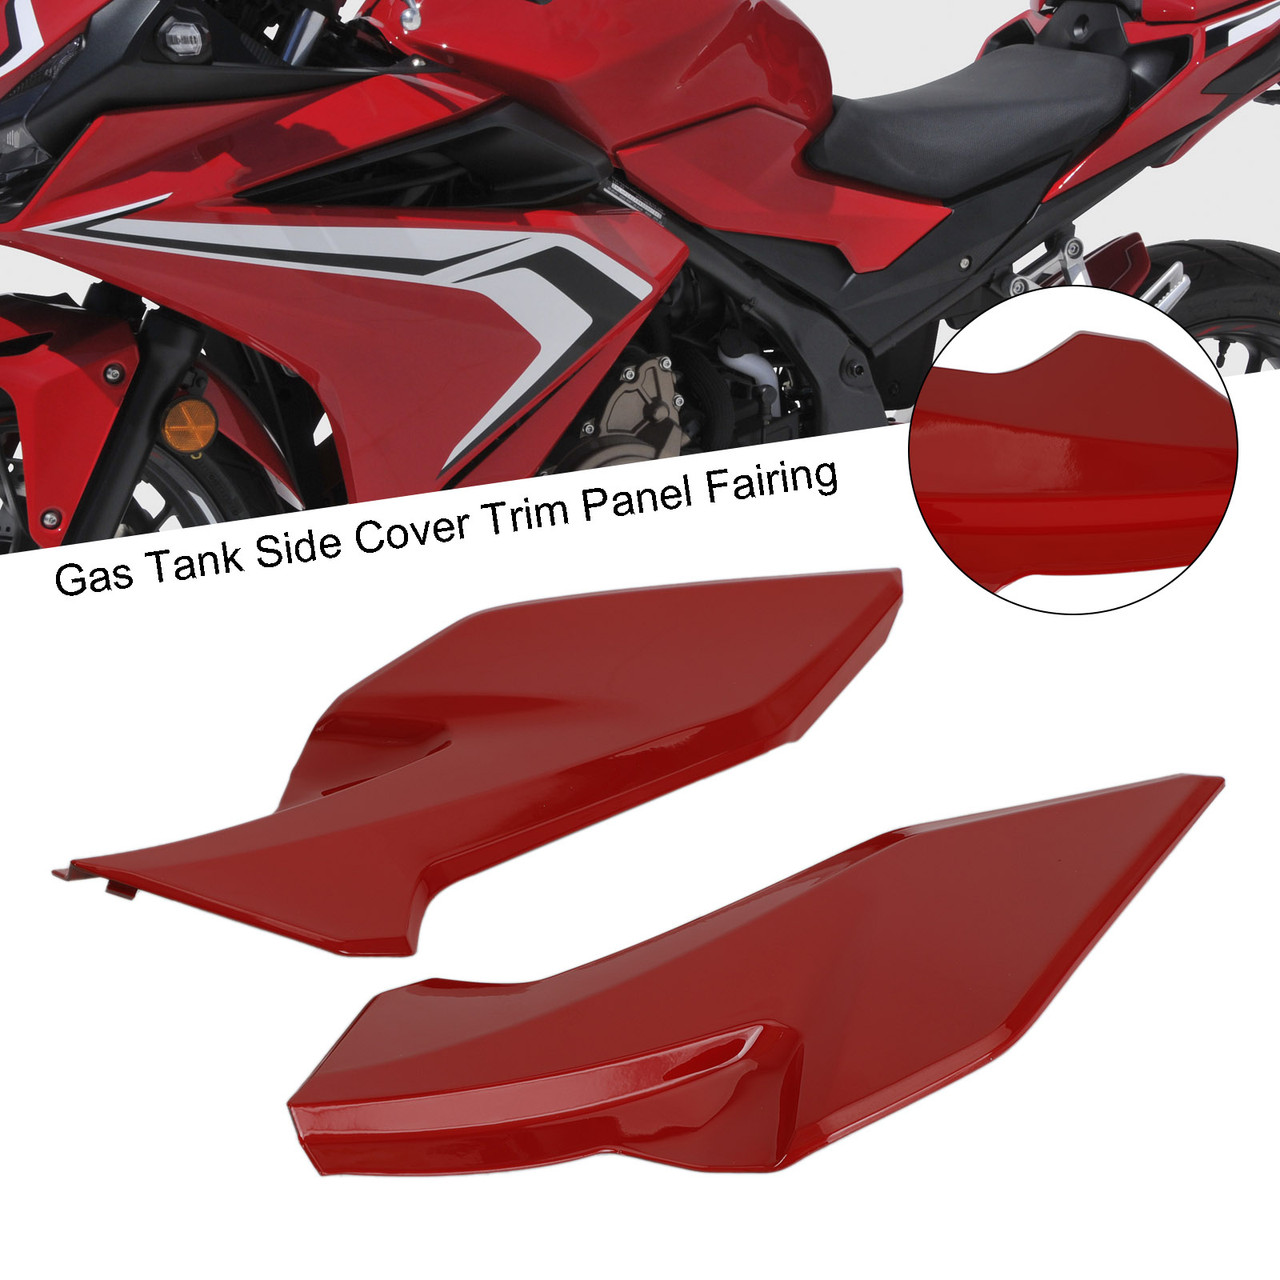 Gas Tank Side Cover Trim Panel Fairing For HONDA CBR500R 2019-2021 Red